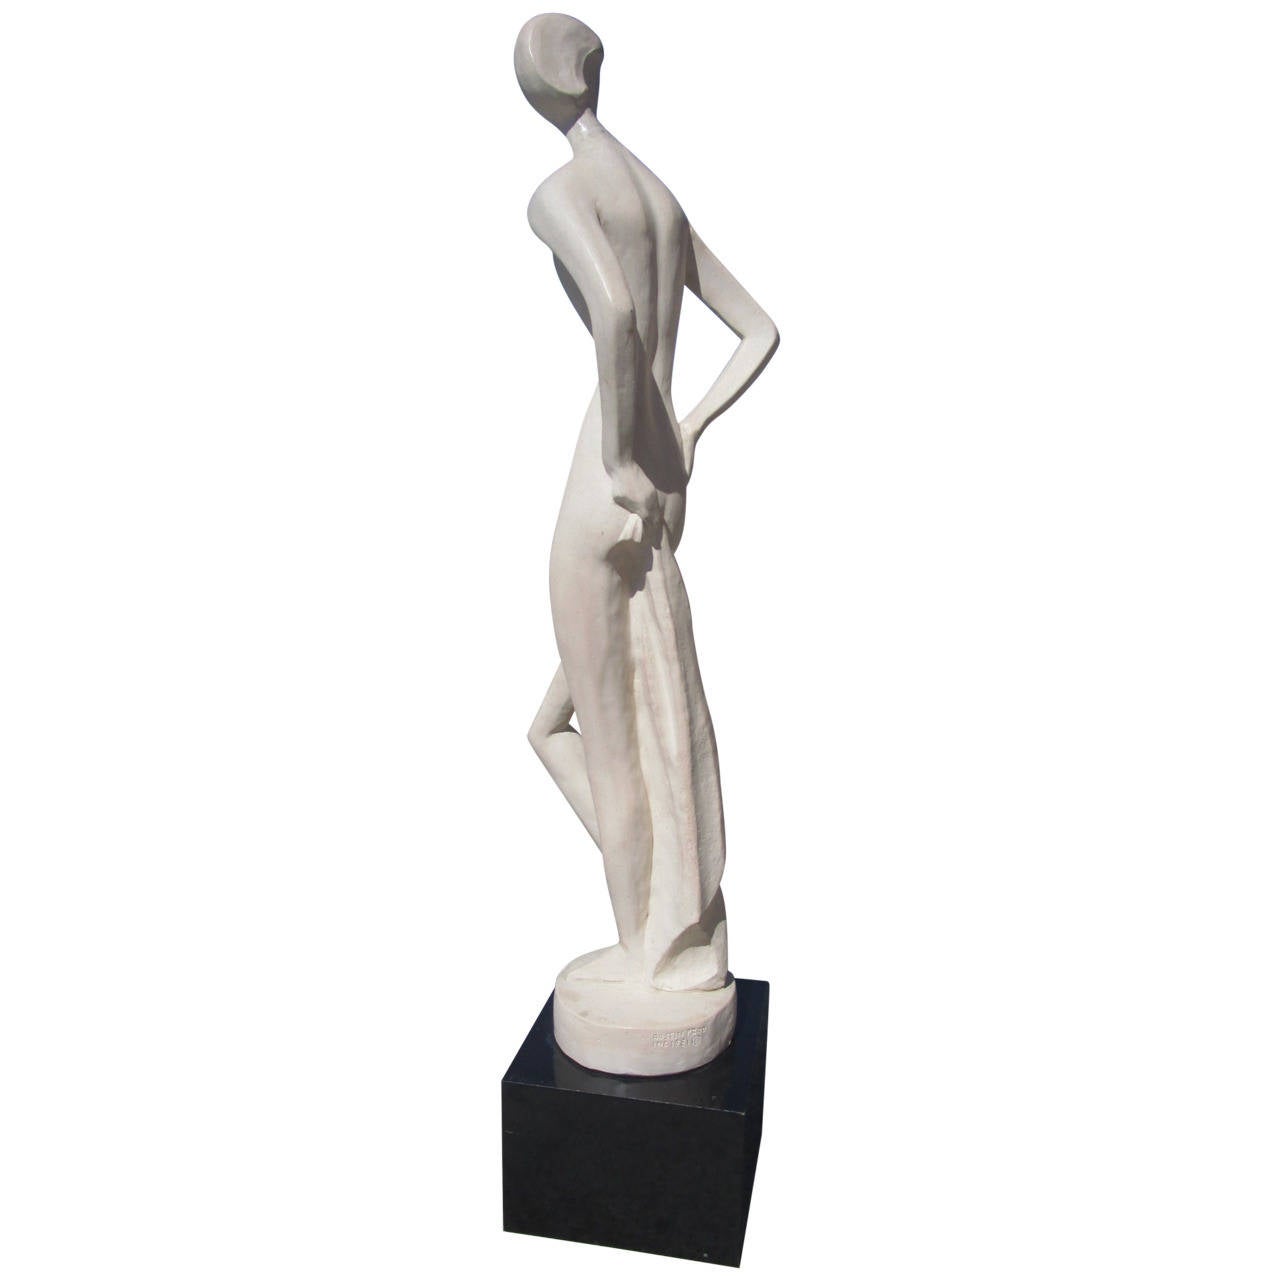 Plaster Nude Contrapposto Sculpture Signed Austin Prod Inc At StDibs Austin Prodinc